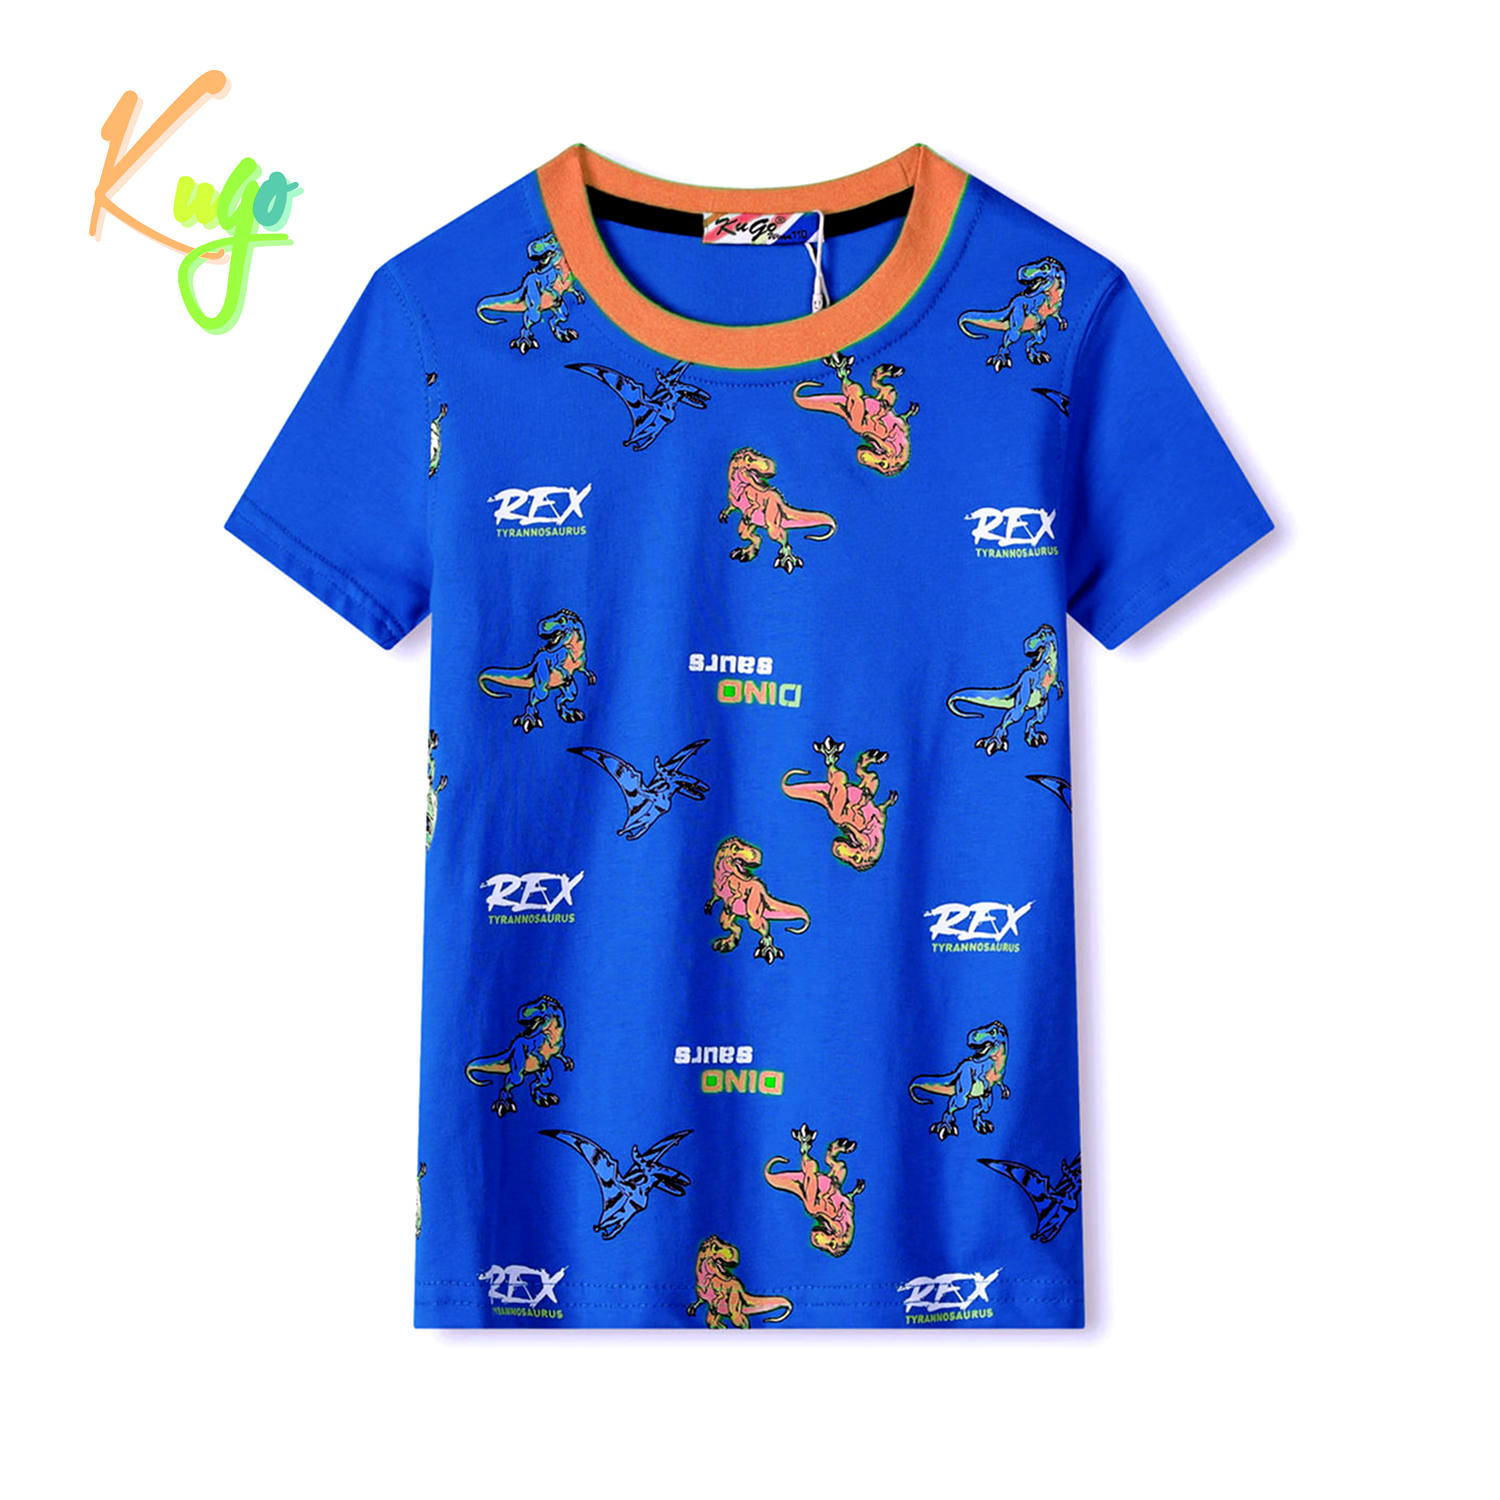 Chlapecké tričko - KUGO TM8574C, modrá Barva: Modrá, Velikost: 122